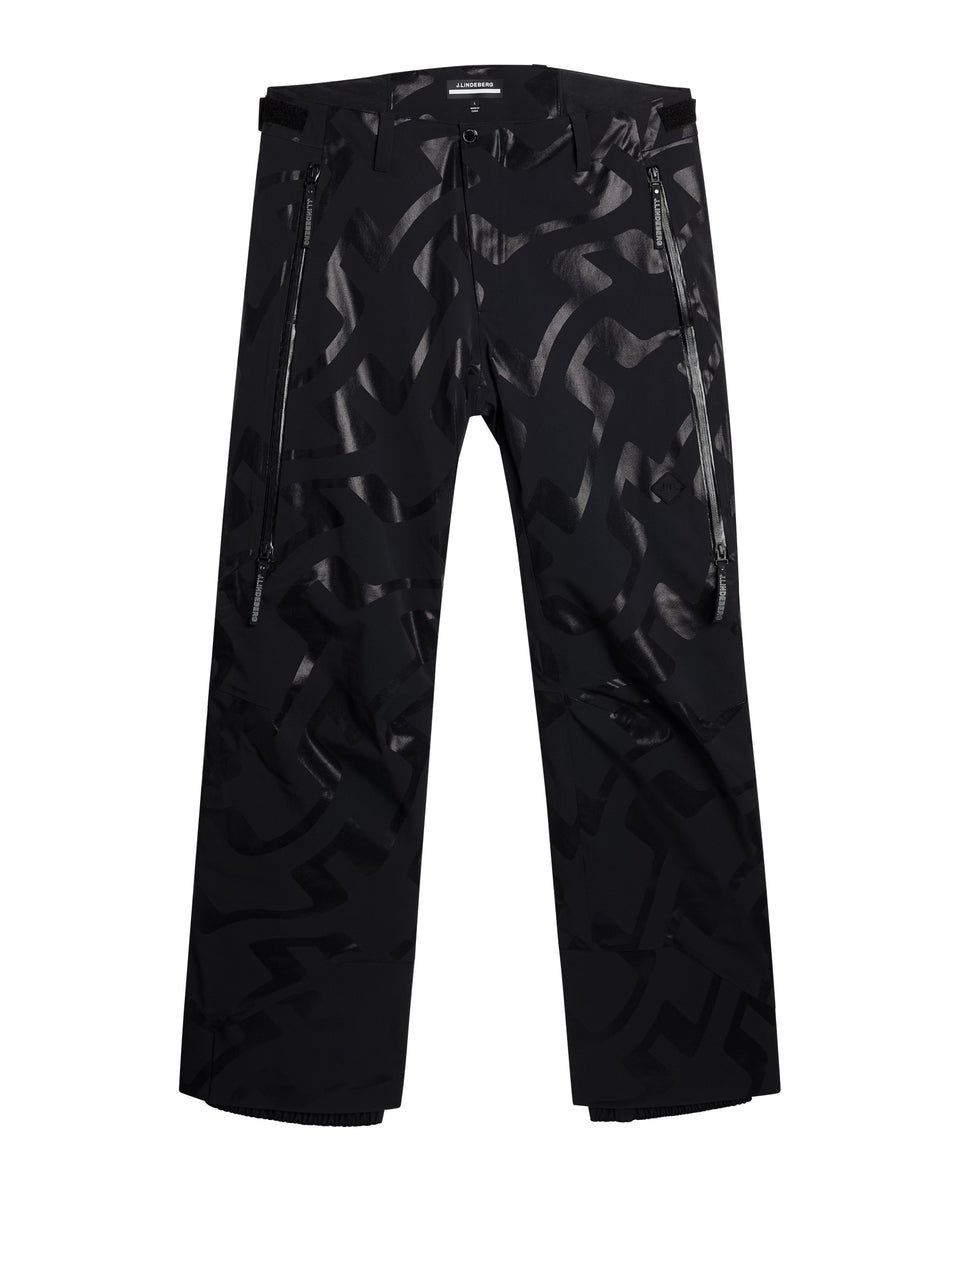 Omnia  Pants Printed / Bridge Wave XL Black Gloss